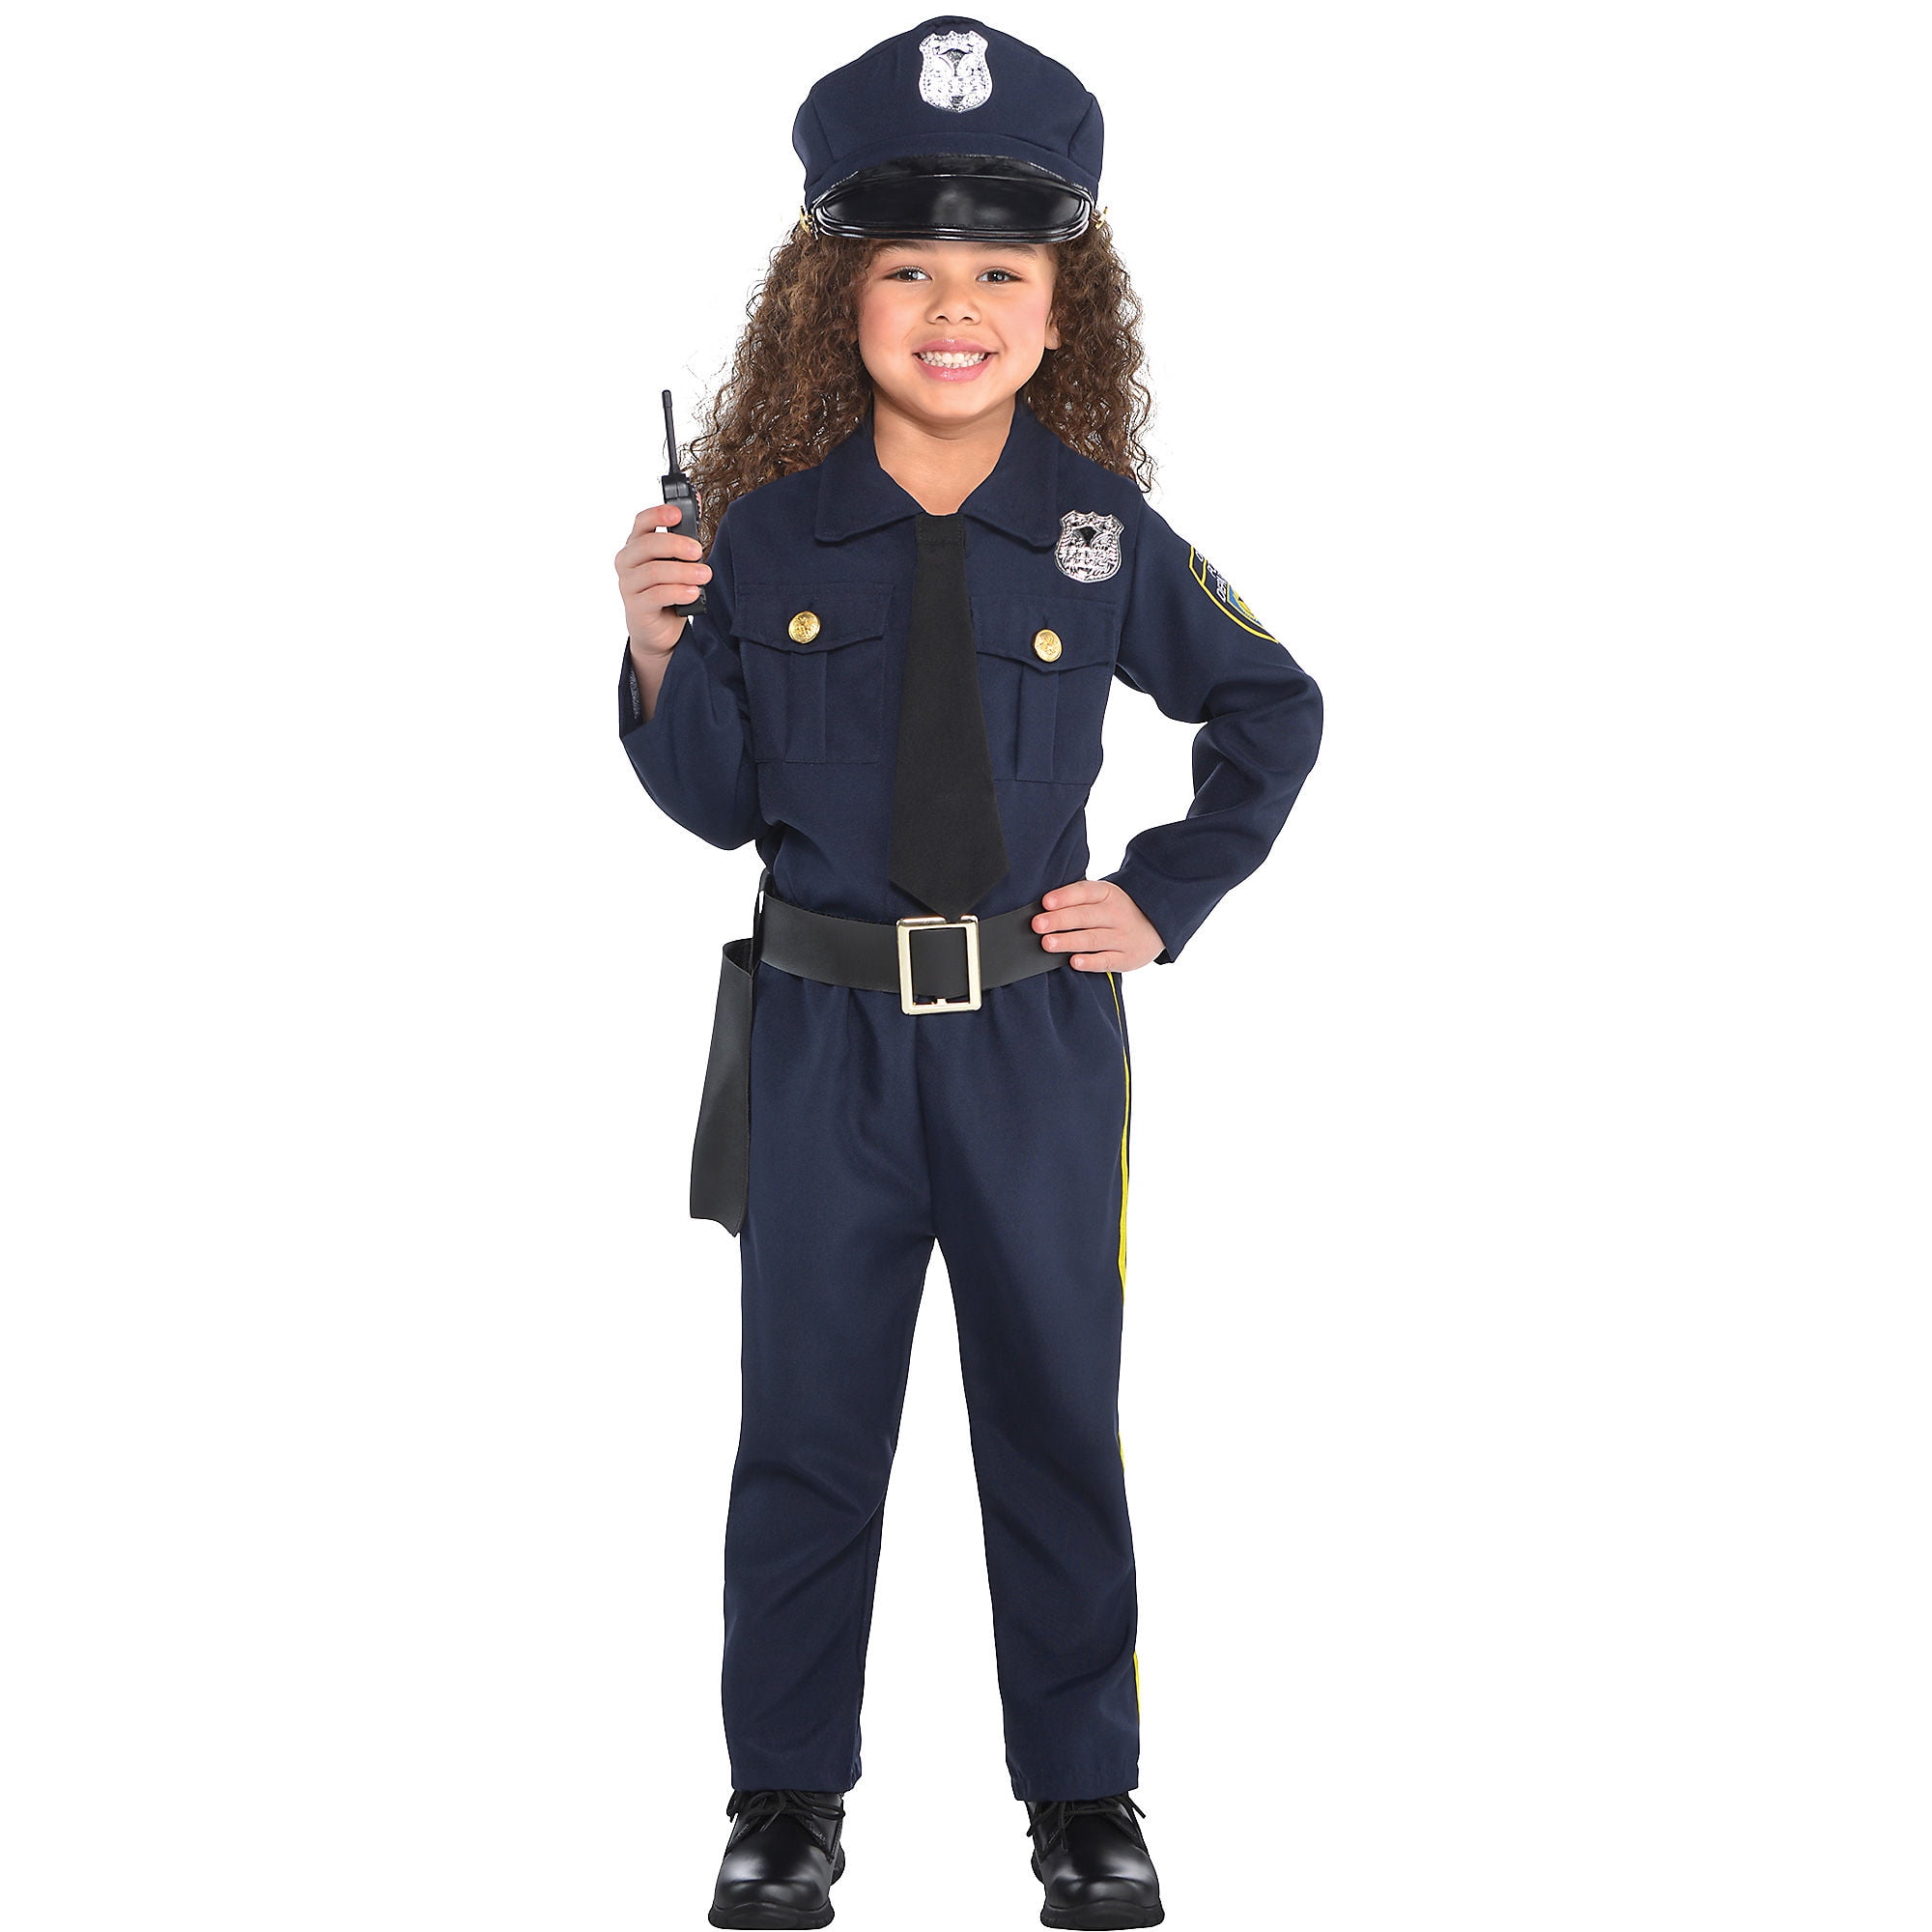 ADULT POLICE FANCY DRESS SET BADGE COSTUME BATTON FLAT HAT COSTUME ACCESSORY